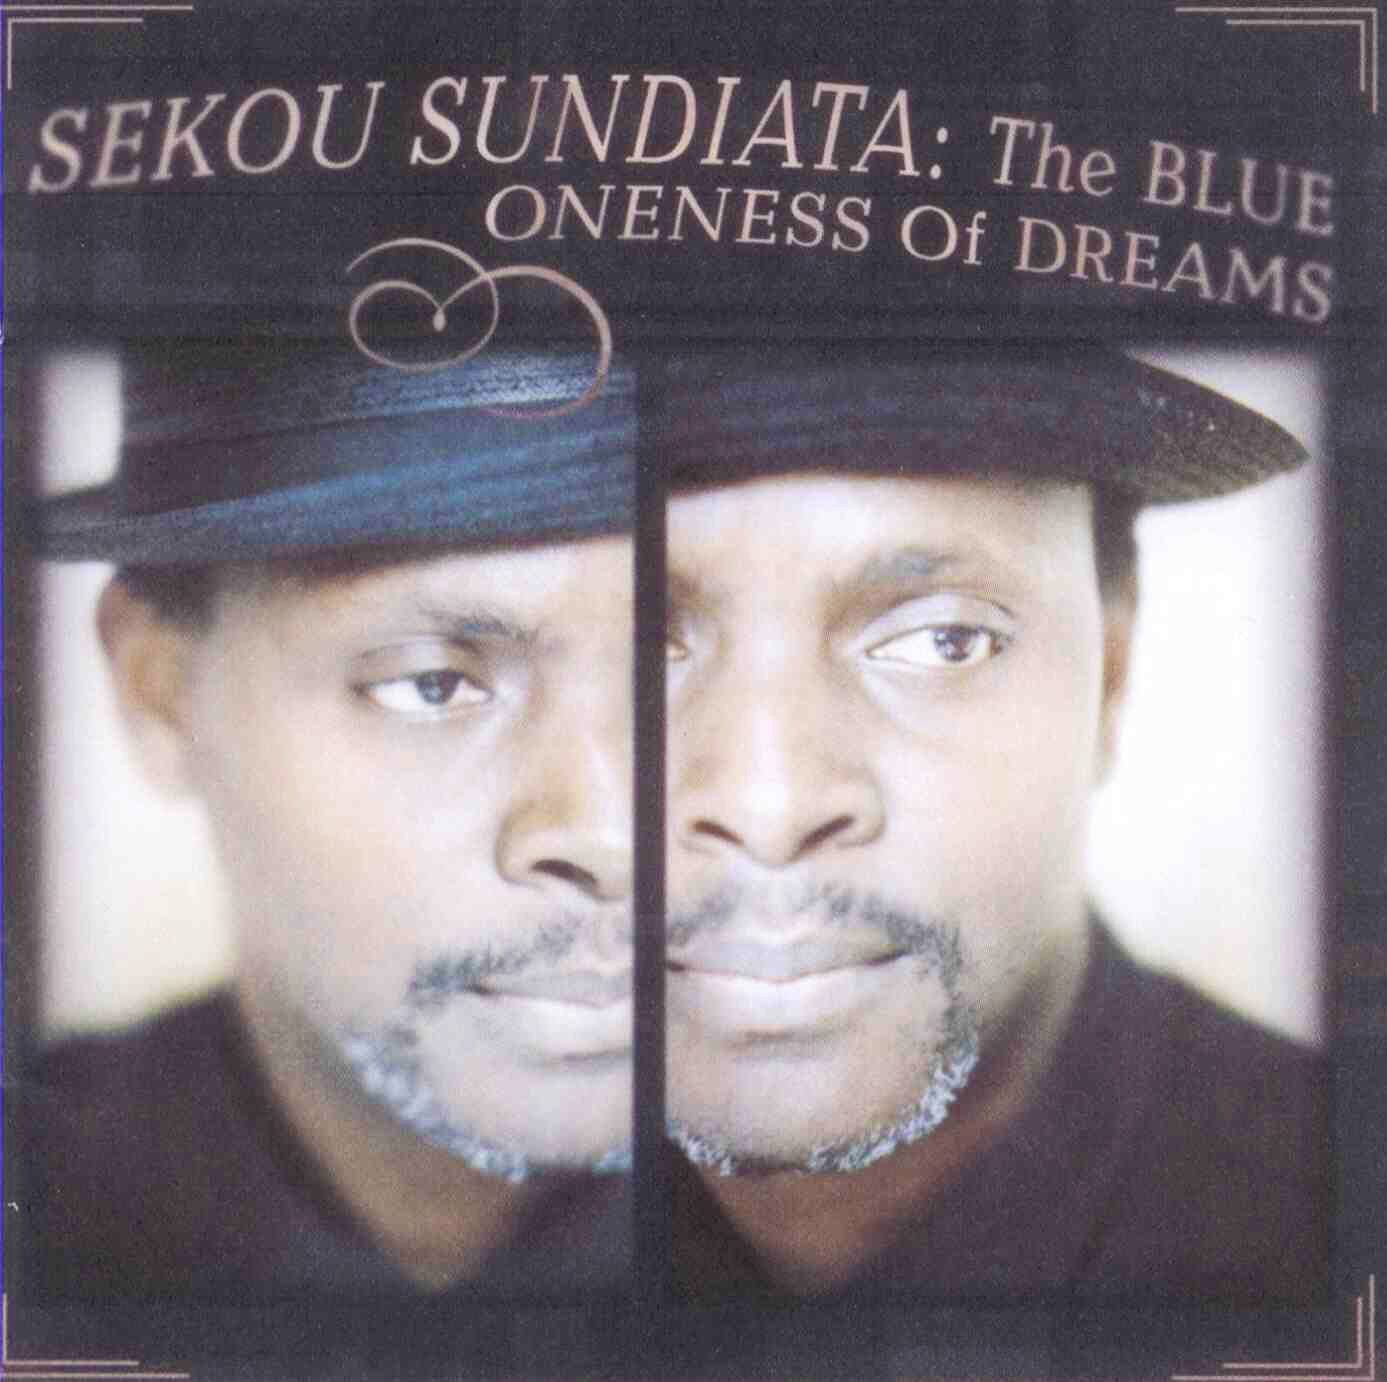 Sekou Sundiata - The Blue Oneness of Dreams - 1997